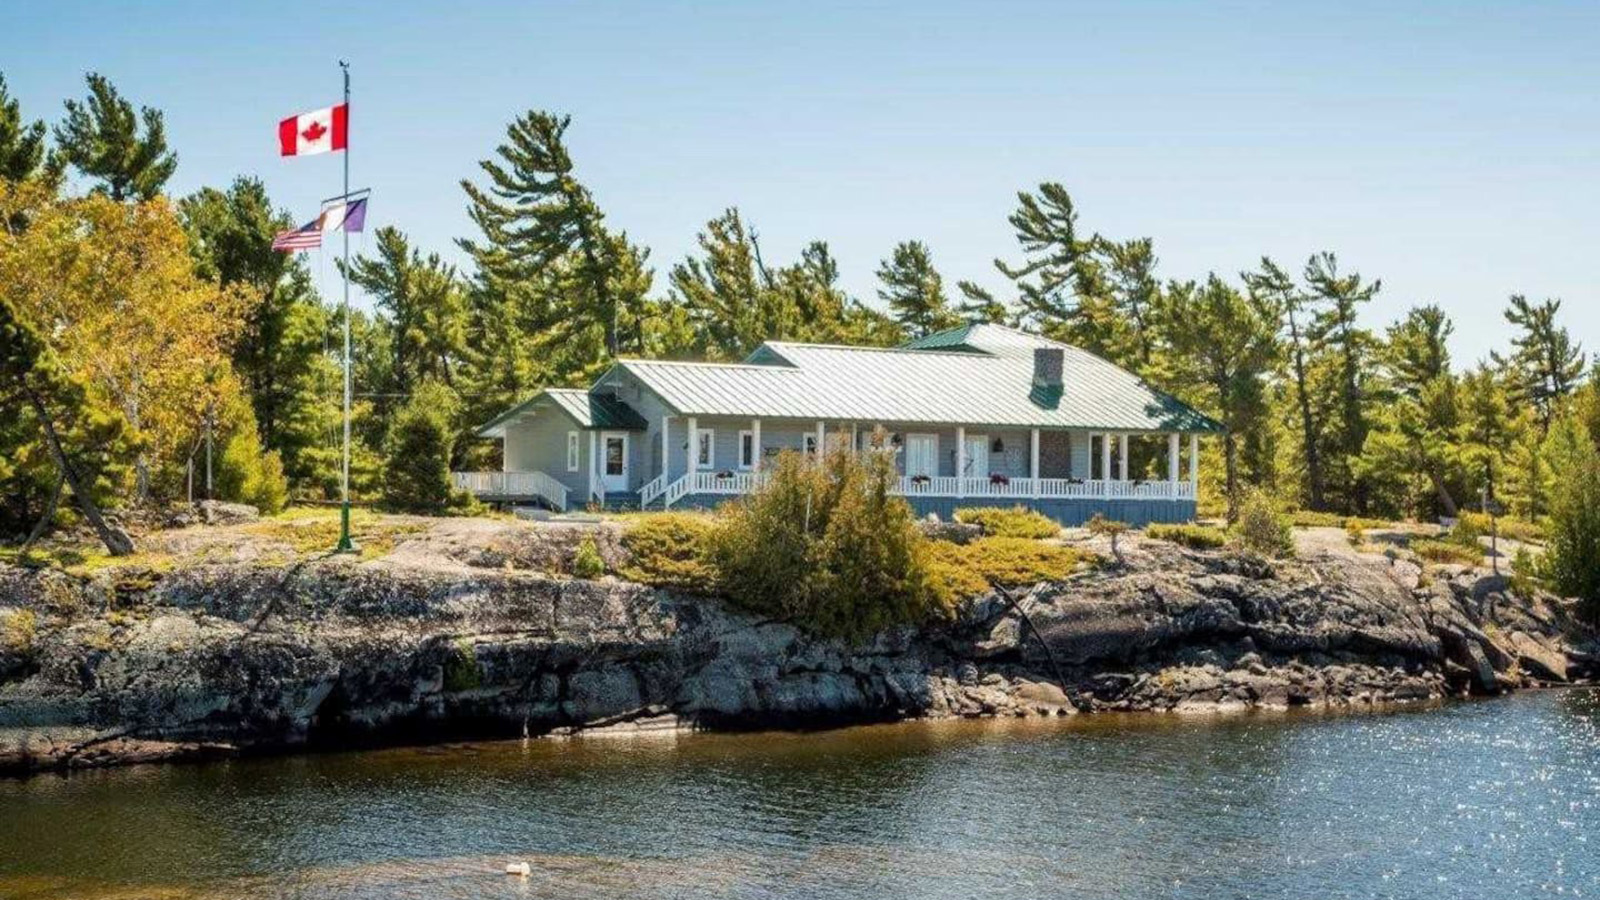 The Main Lodge on Bigwood Island, a private island on airbnb